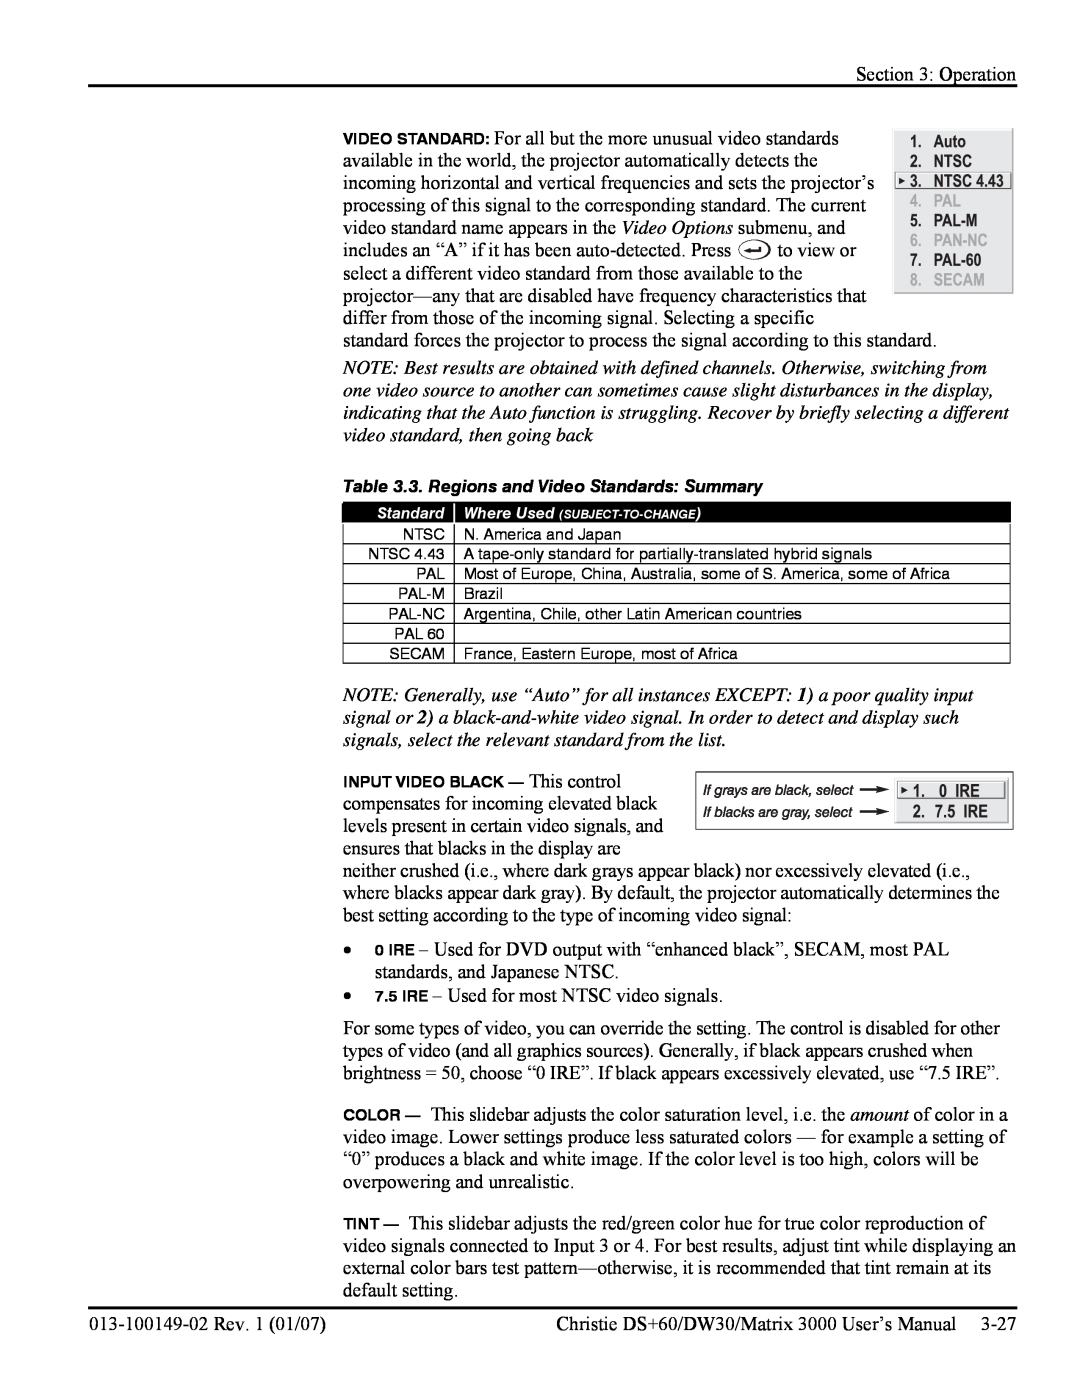 Texas Instruments MATRIX 3000, DW30 user manual 3. Regions and Video Standards Summary 